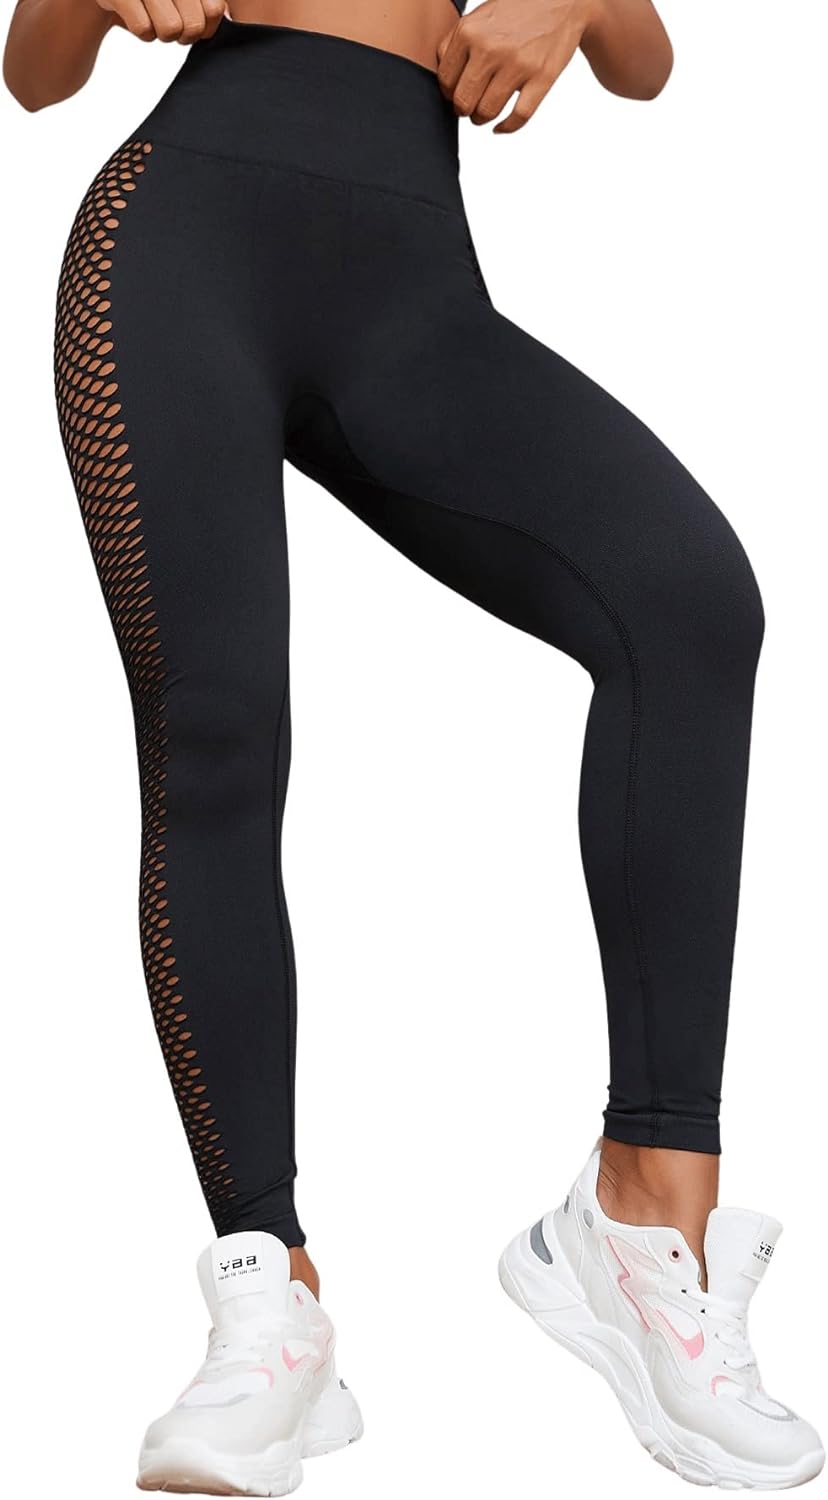 SweatyRocks Leggings Women Yoga Workout Pants High Waist Cutout Tights